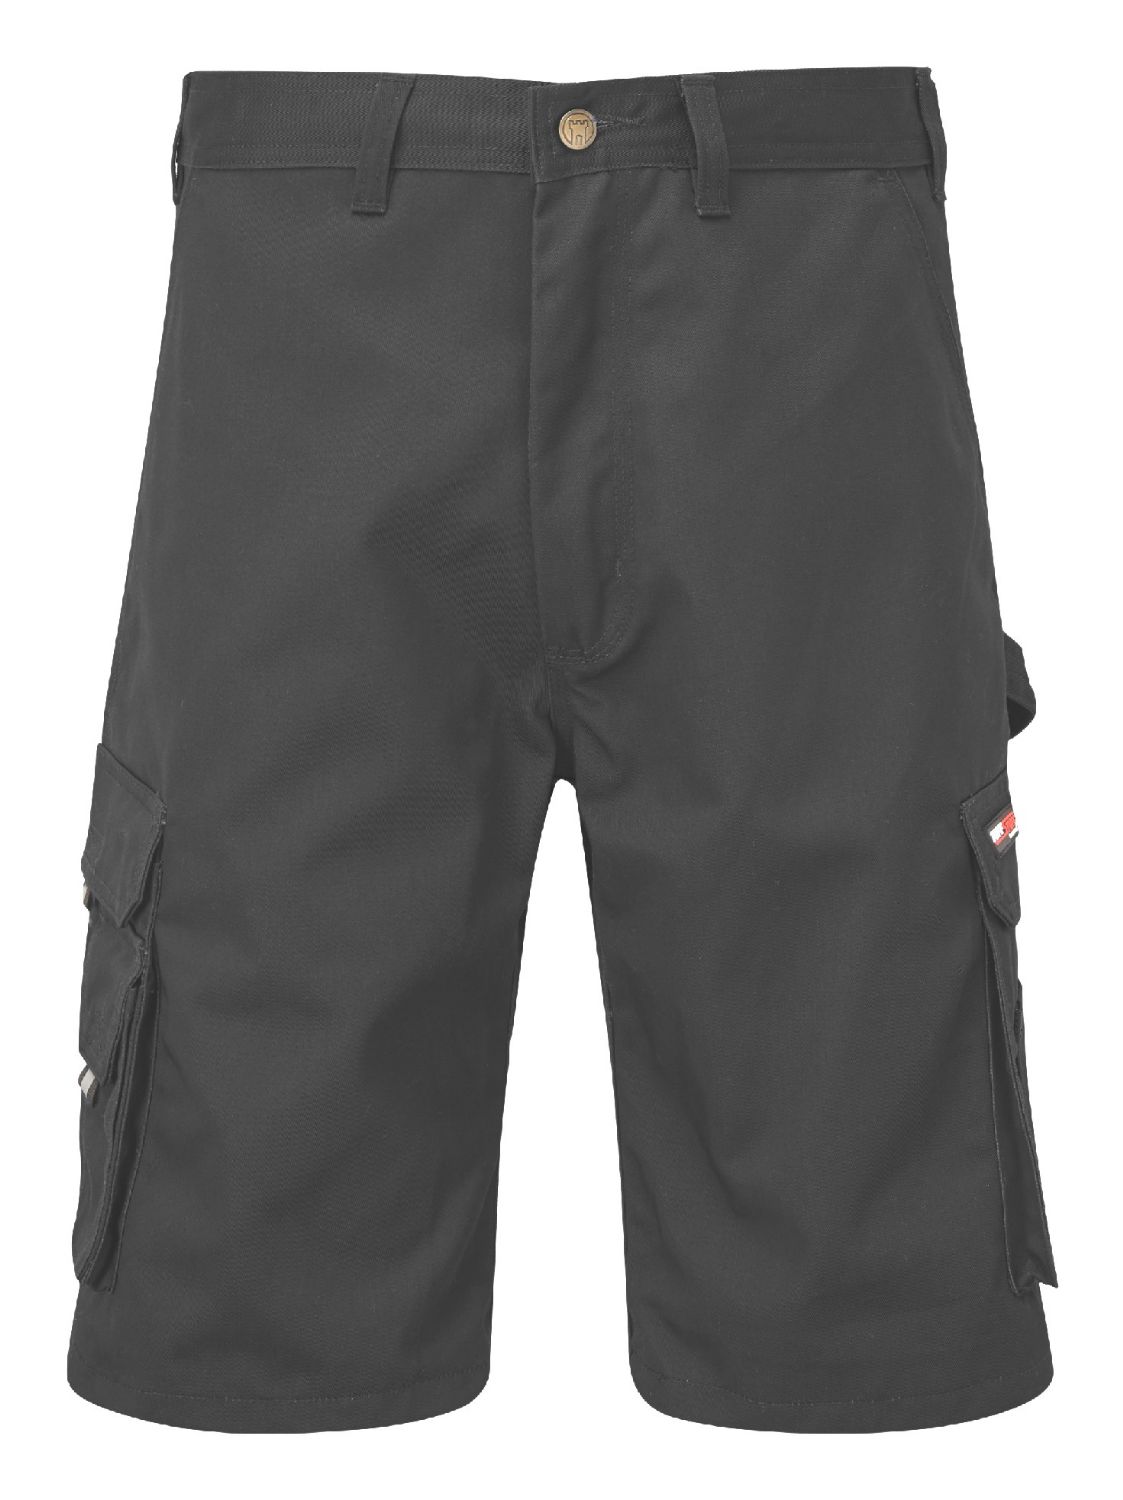 Tuffstuff Shorts 811 Black size 36